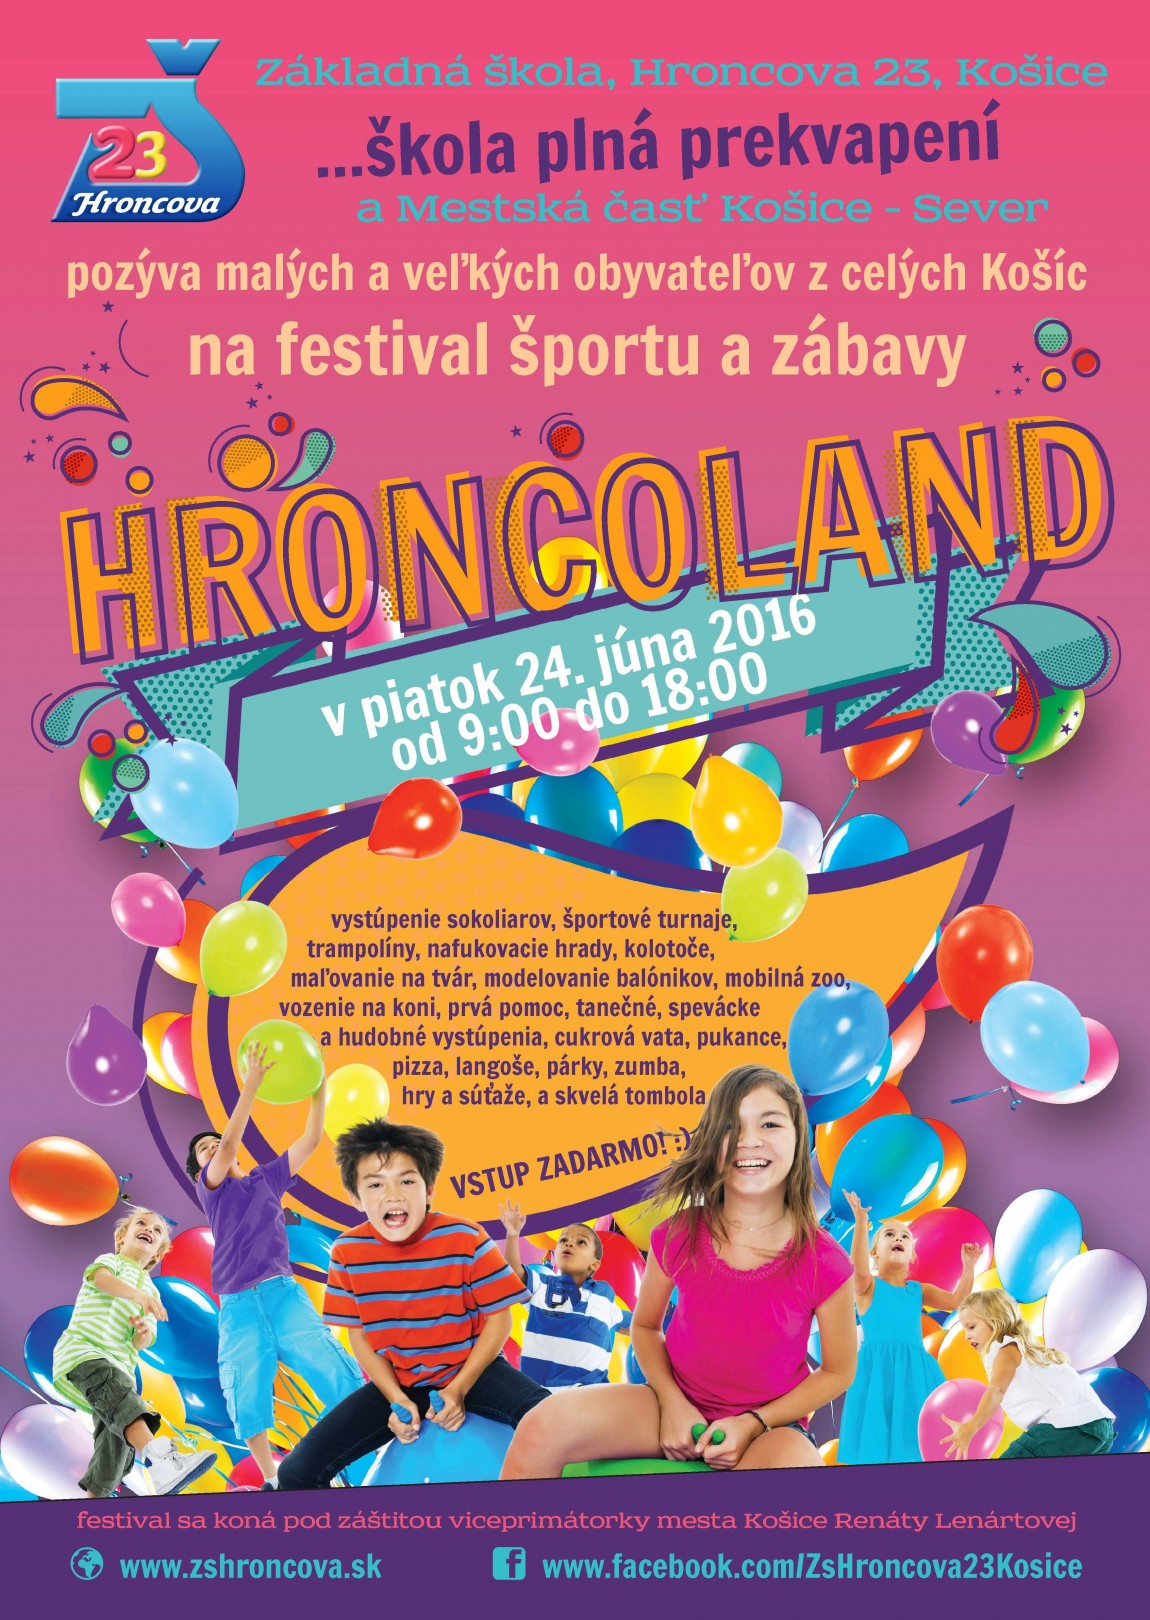 Pozvánka – HroncoLand …festival športu a zábavy